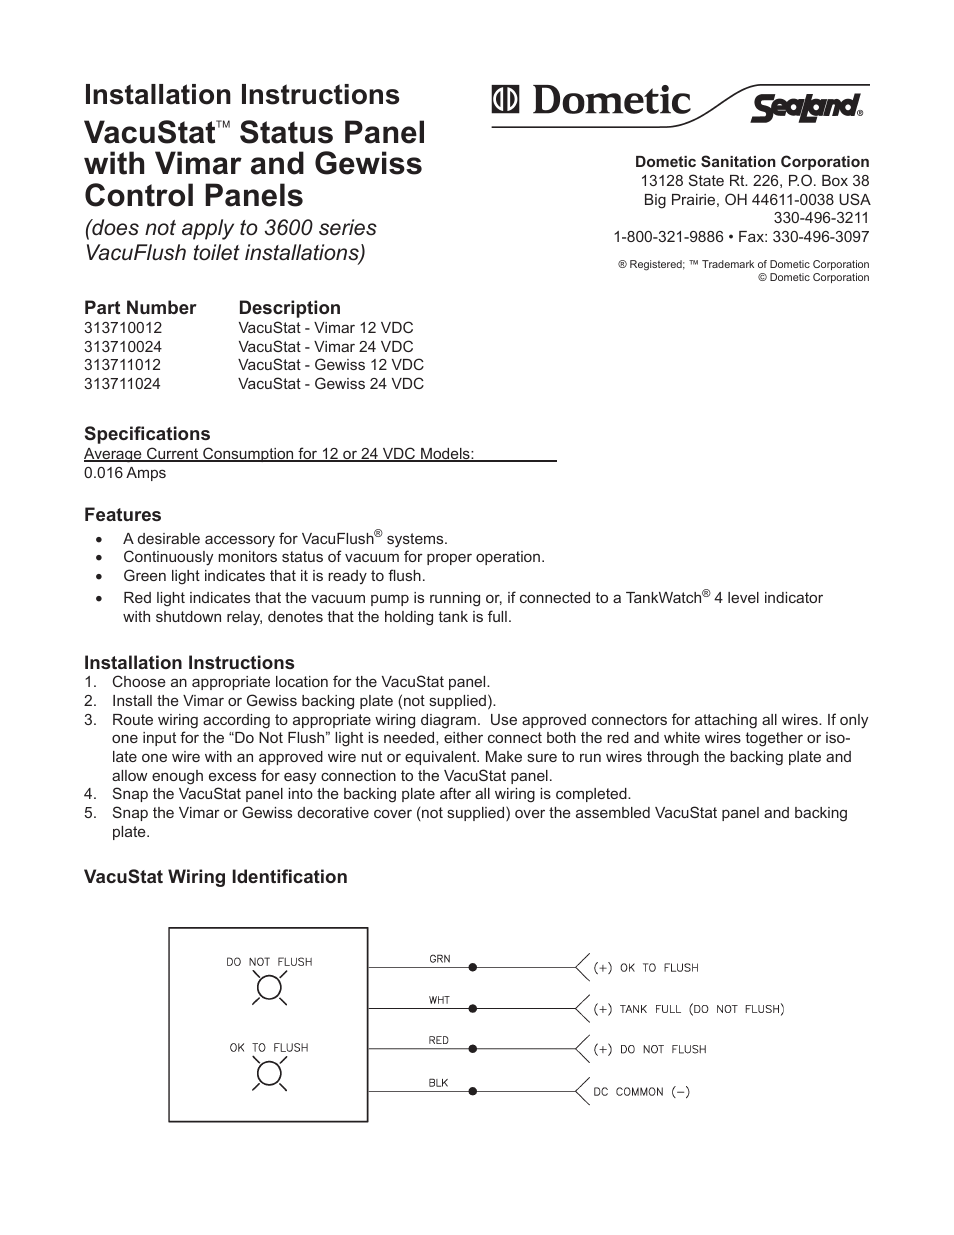 VacuStat Status Panel with Vimar and Gewiss Control Panels